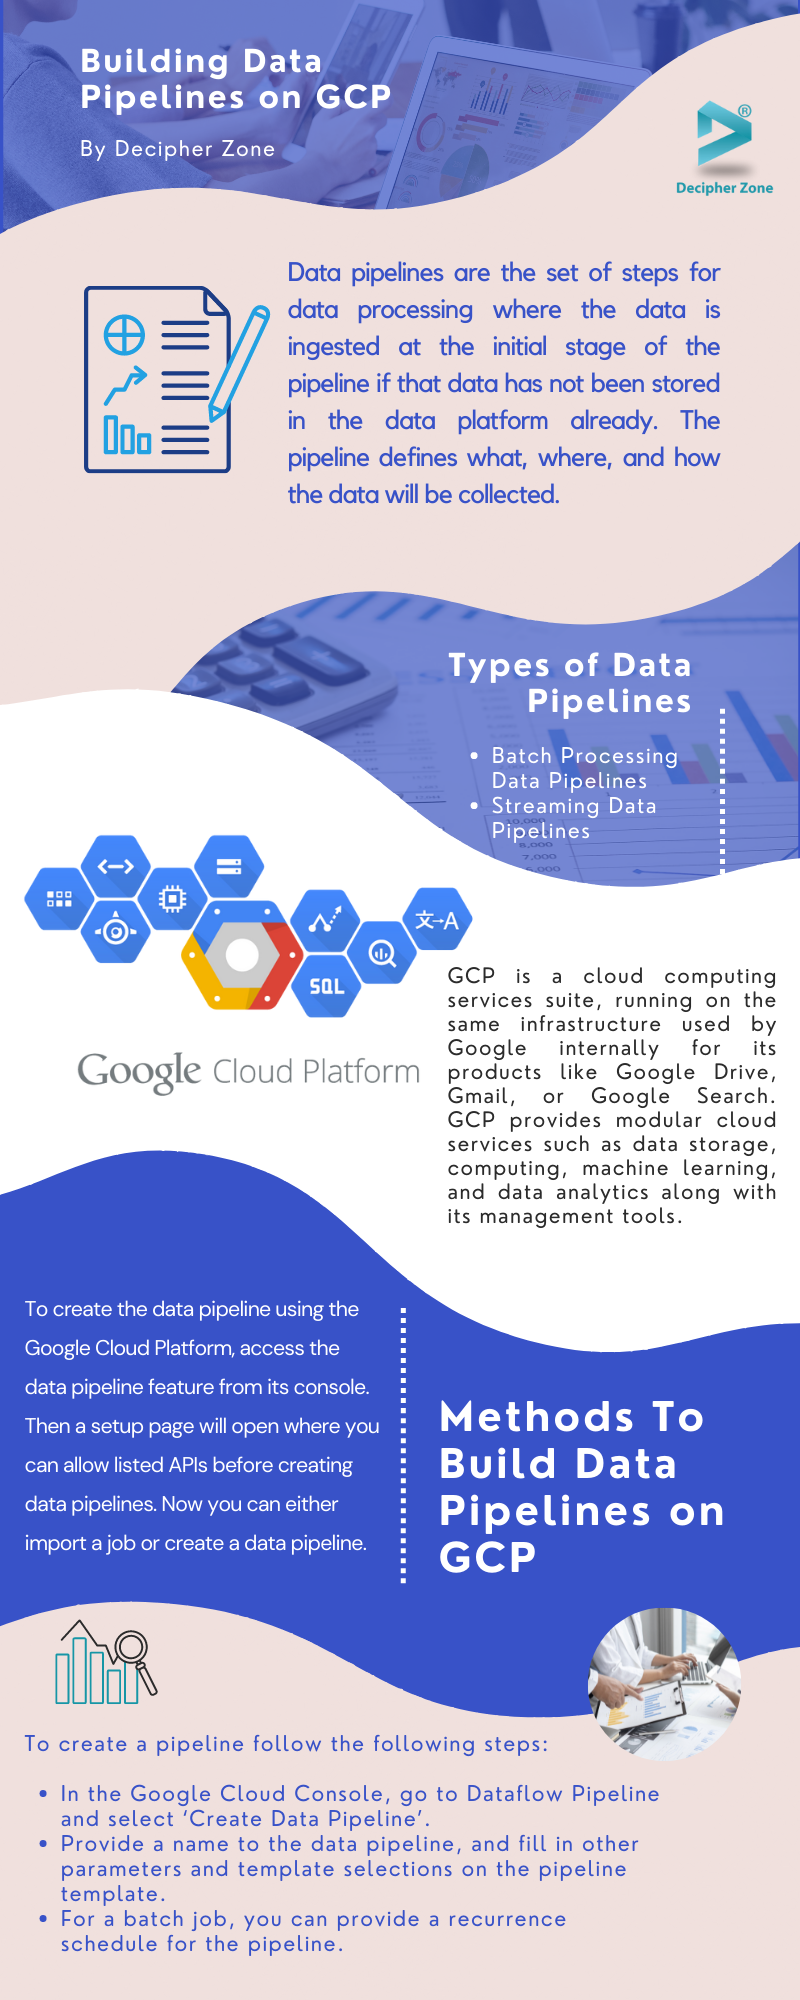 Building Data Pipelines on Google Cloud Platform